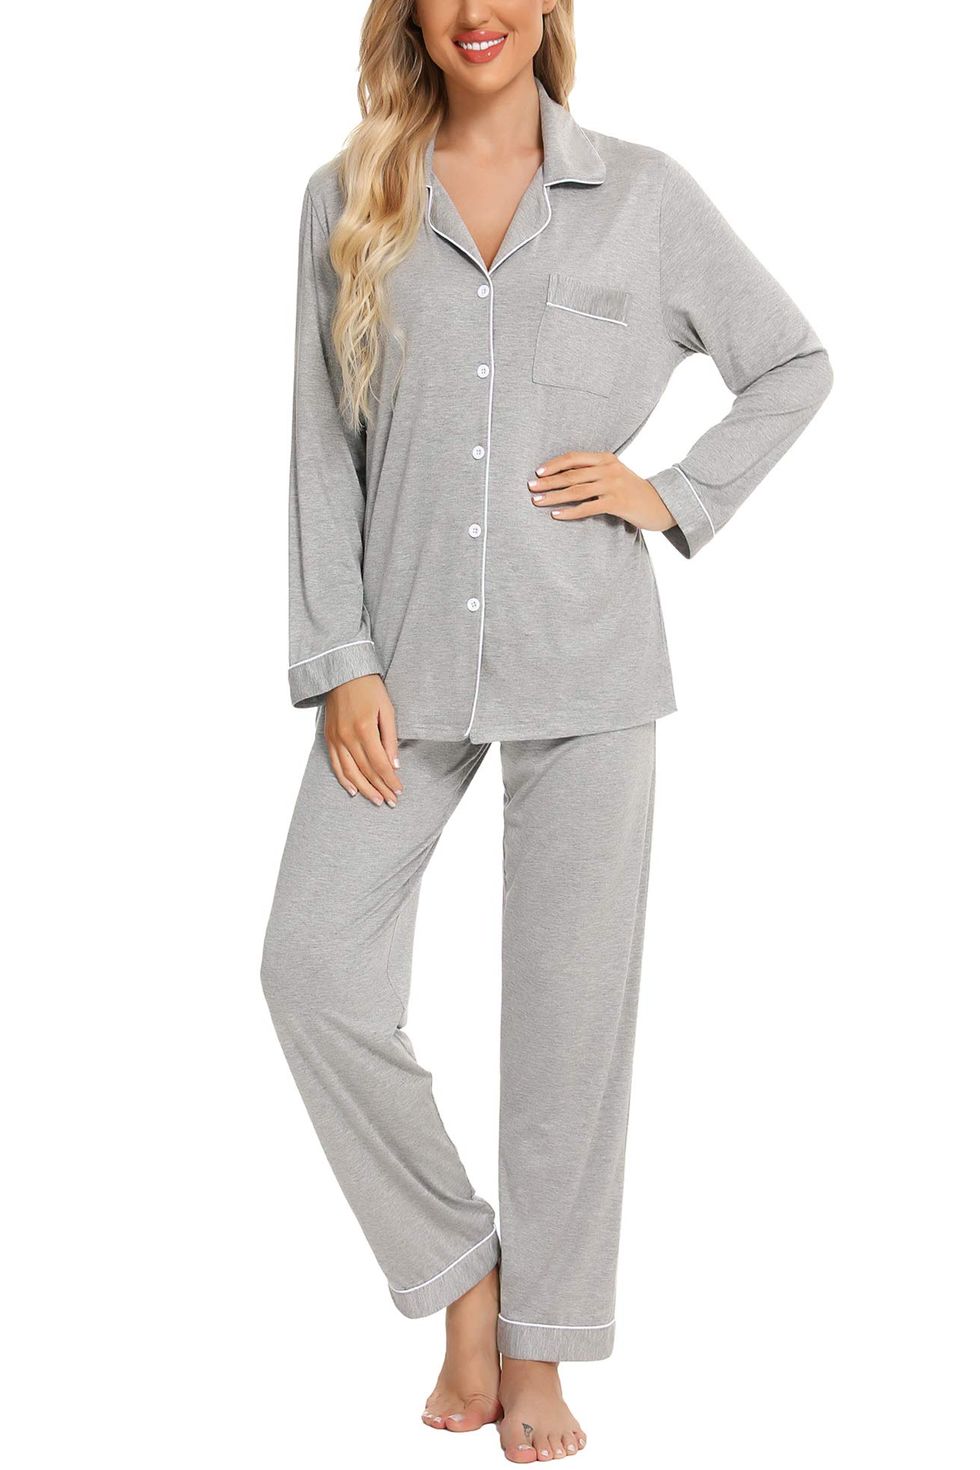 Just Love Women's Thermal Underwear Pajamas Set (Grey, Medium)